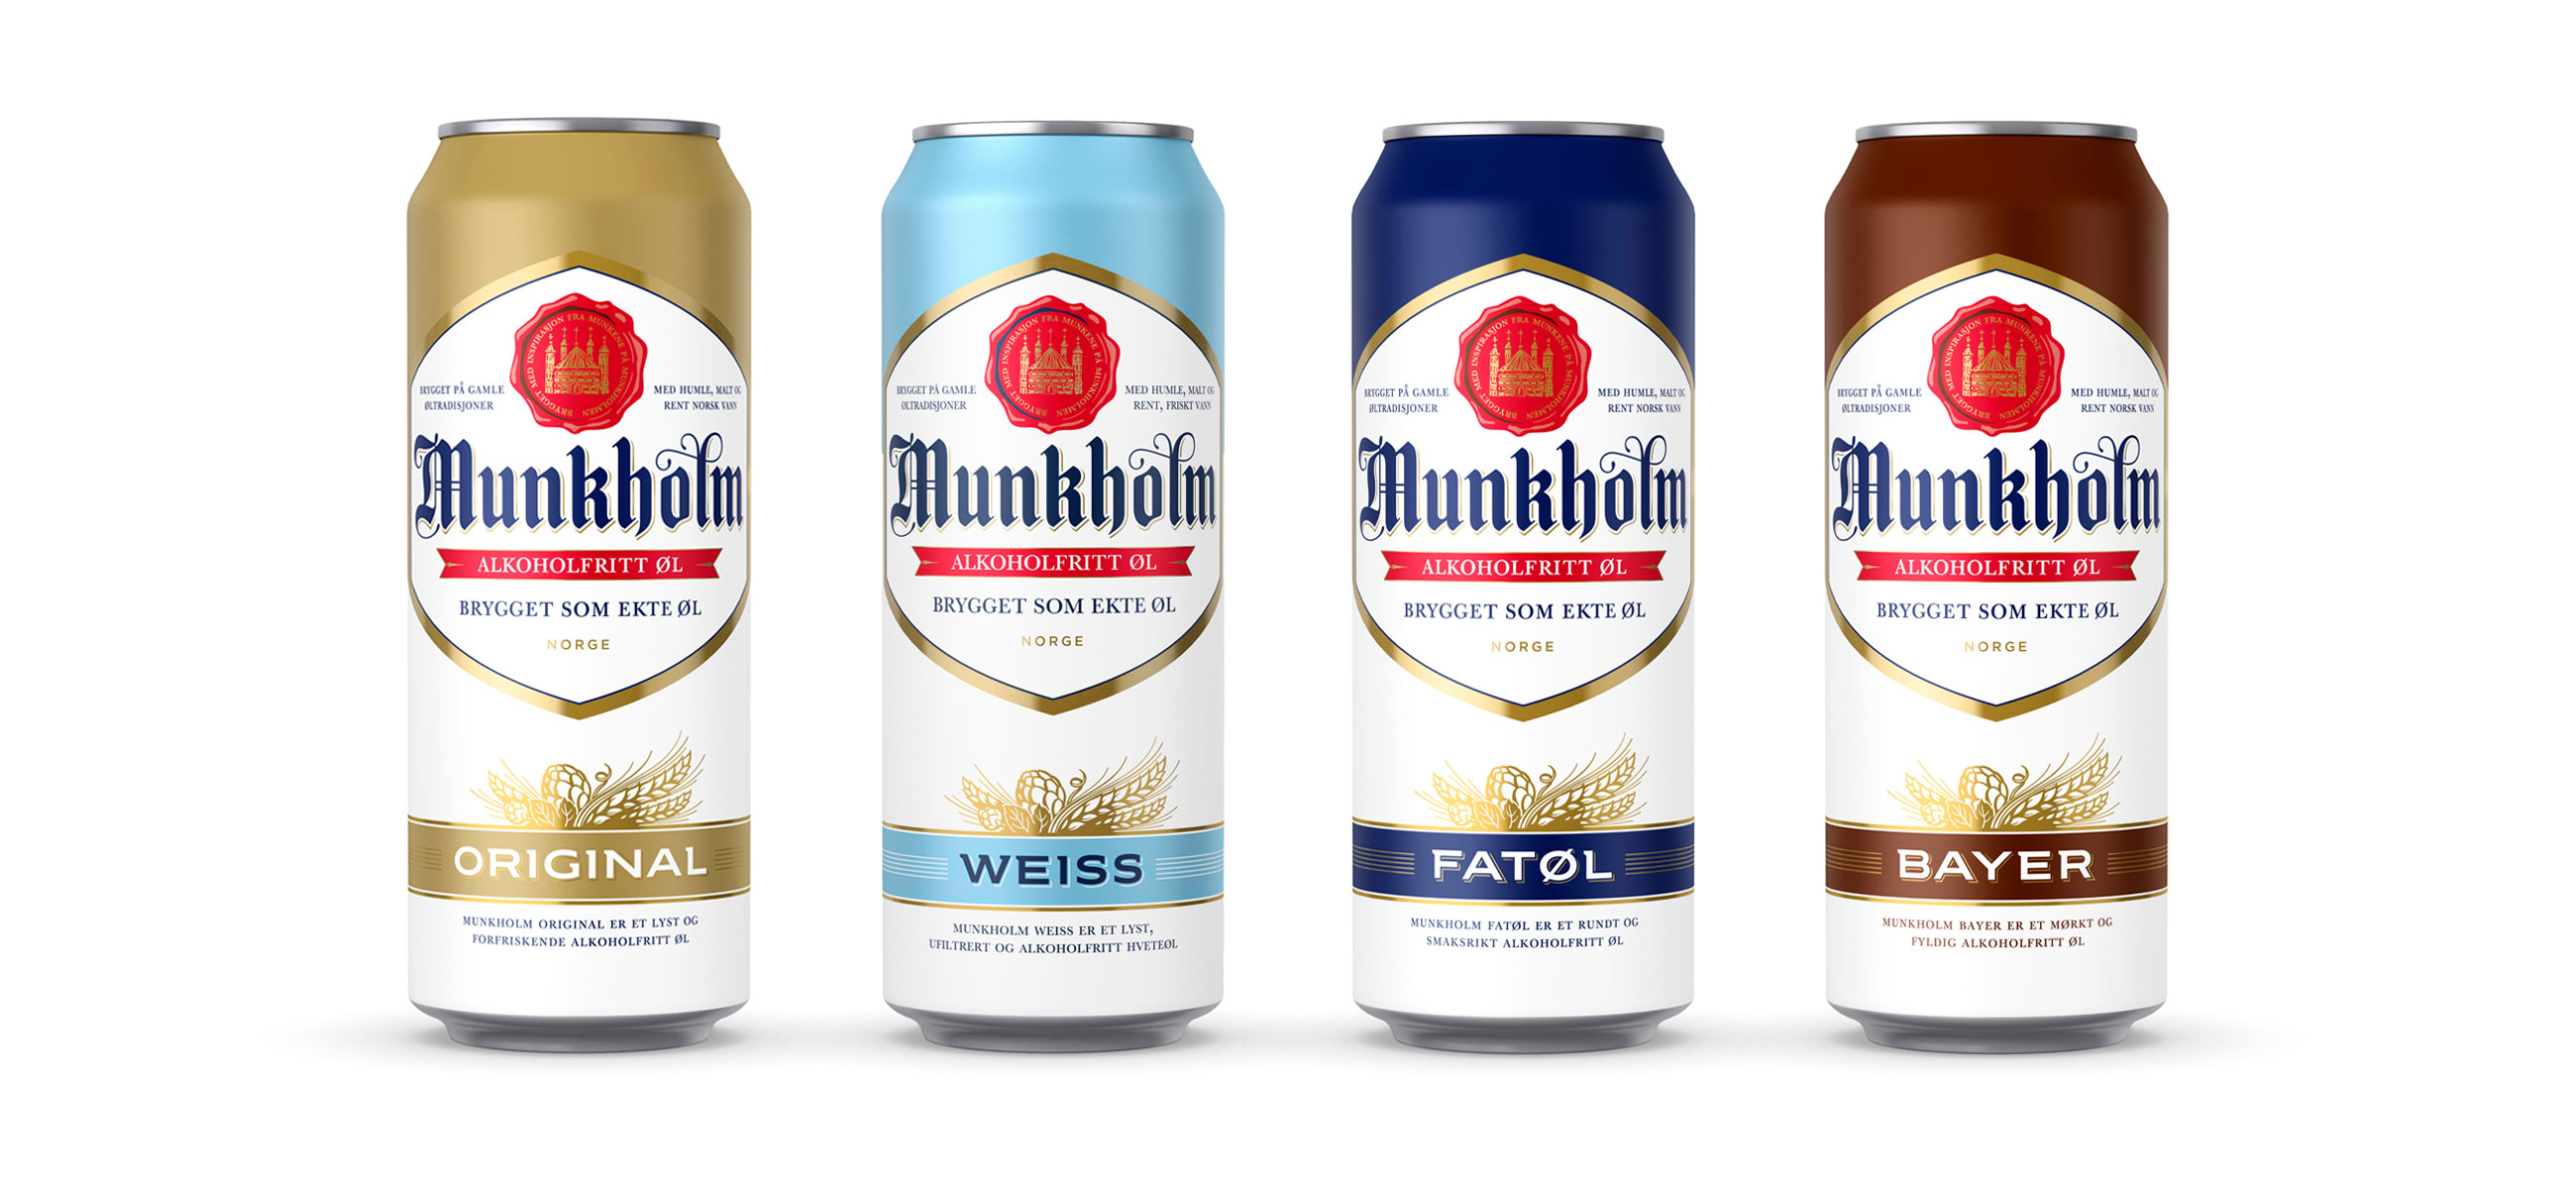 Ringnes Munkholm alkoholfritt øl original, weiss, fatøl, bayer, pakningsdesign, emballasje